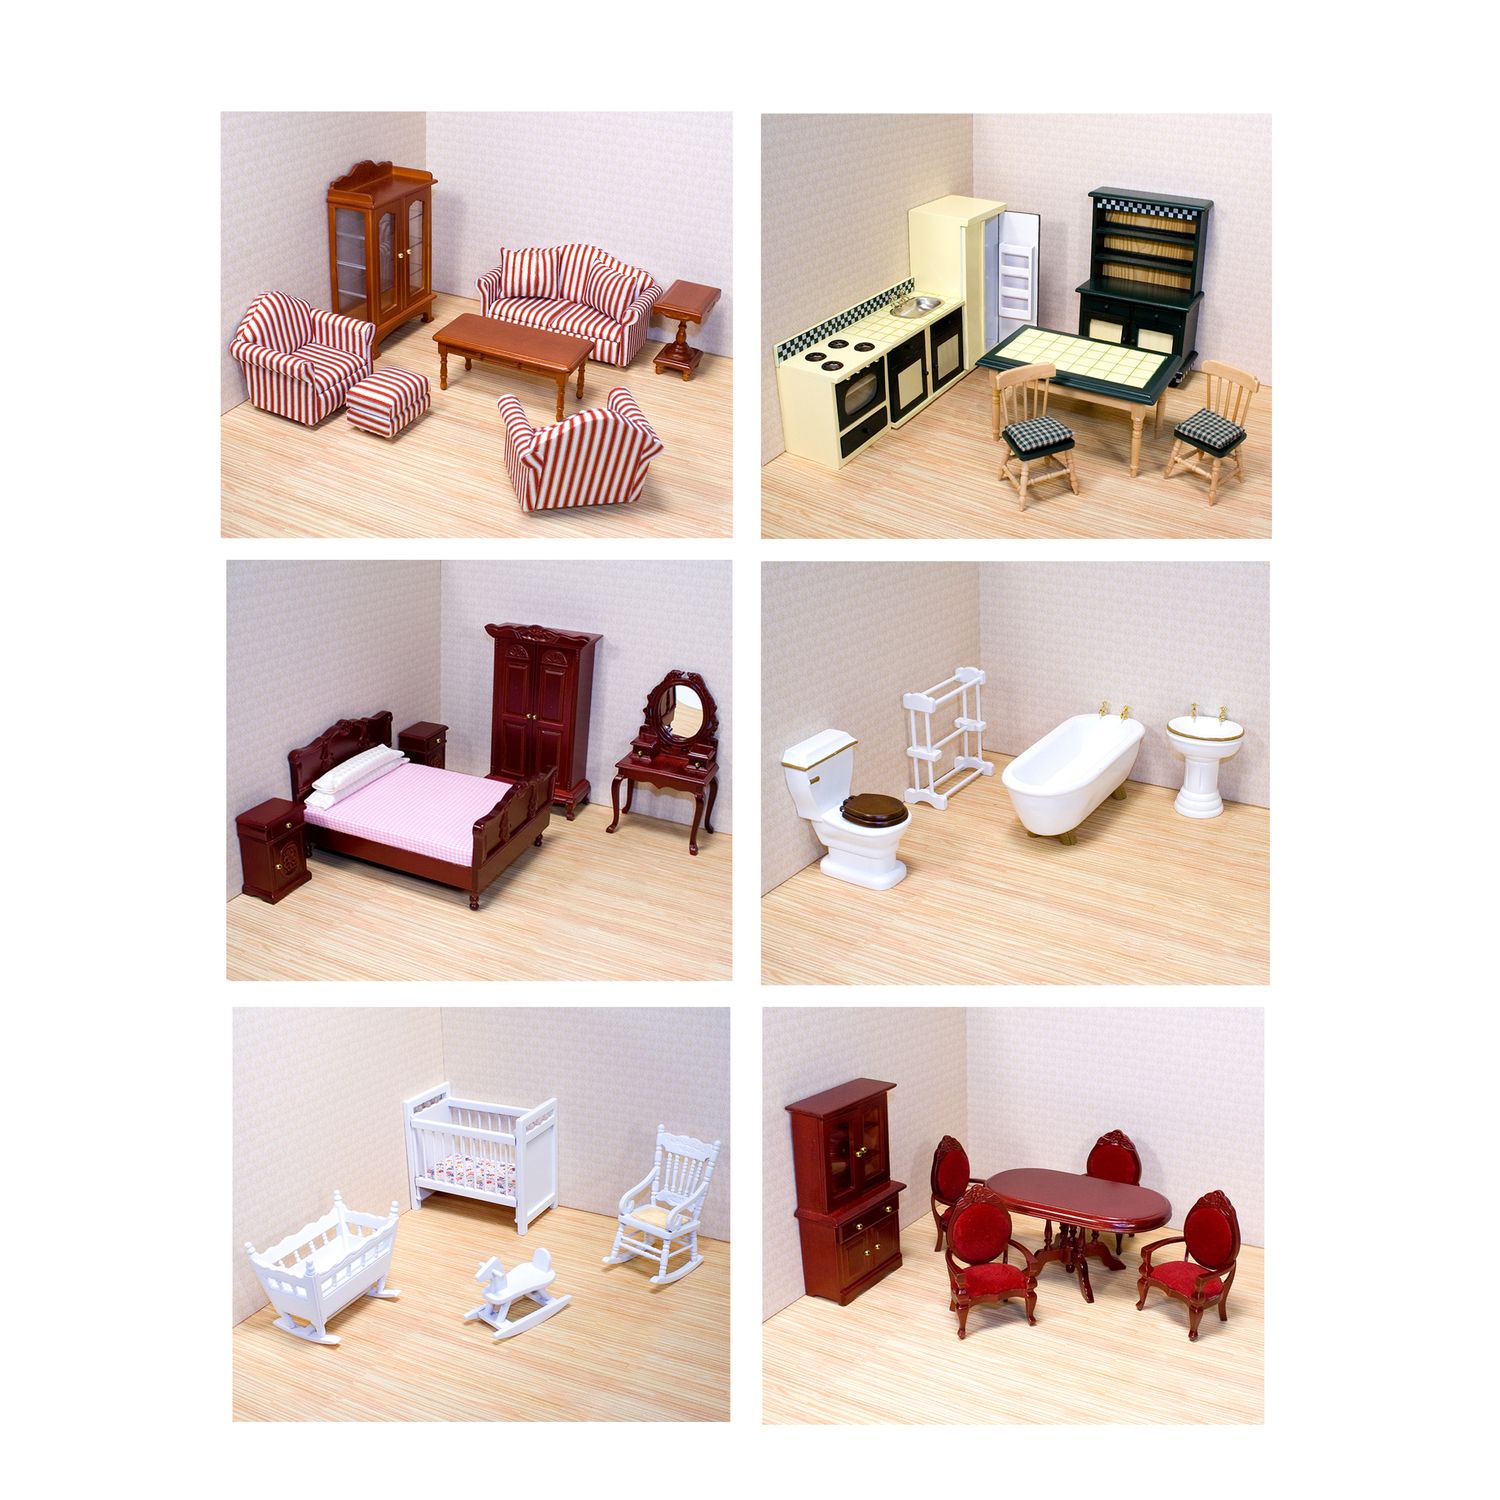 melissa and doug doll furniture